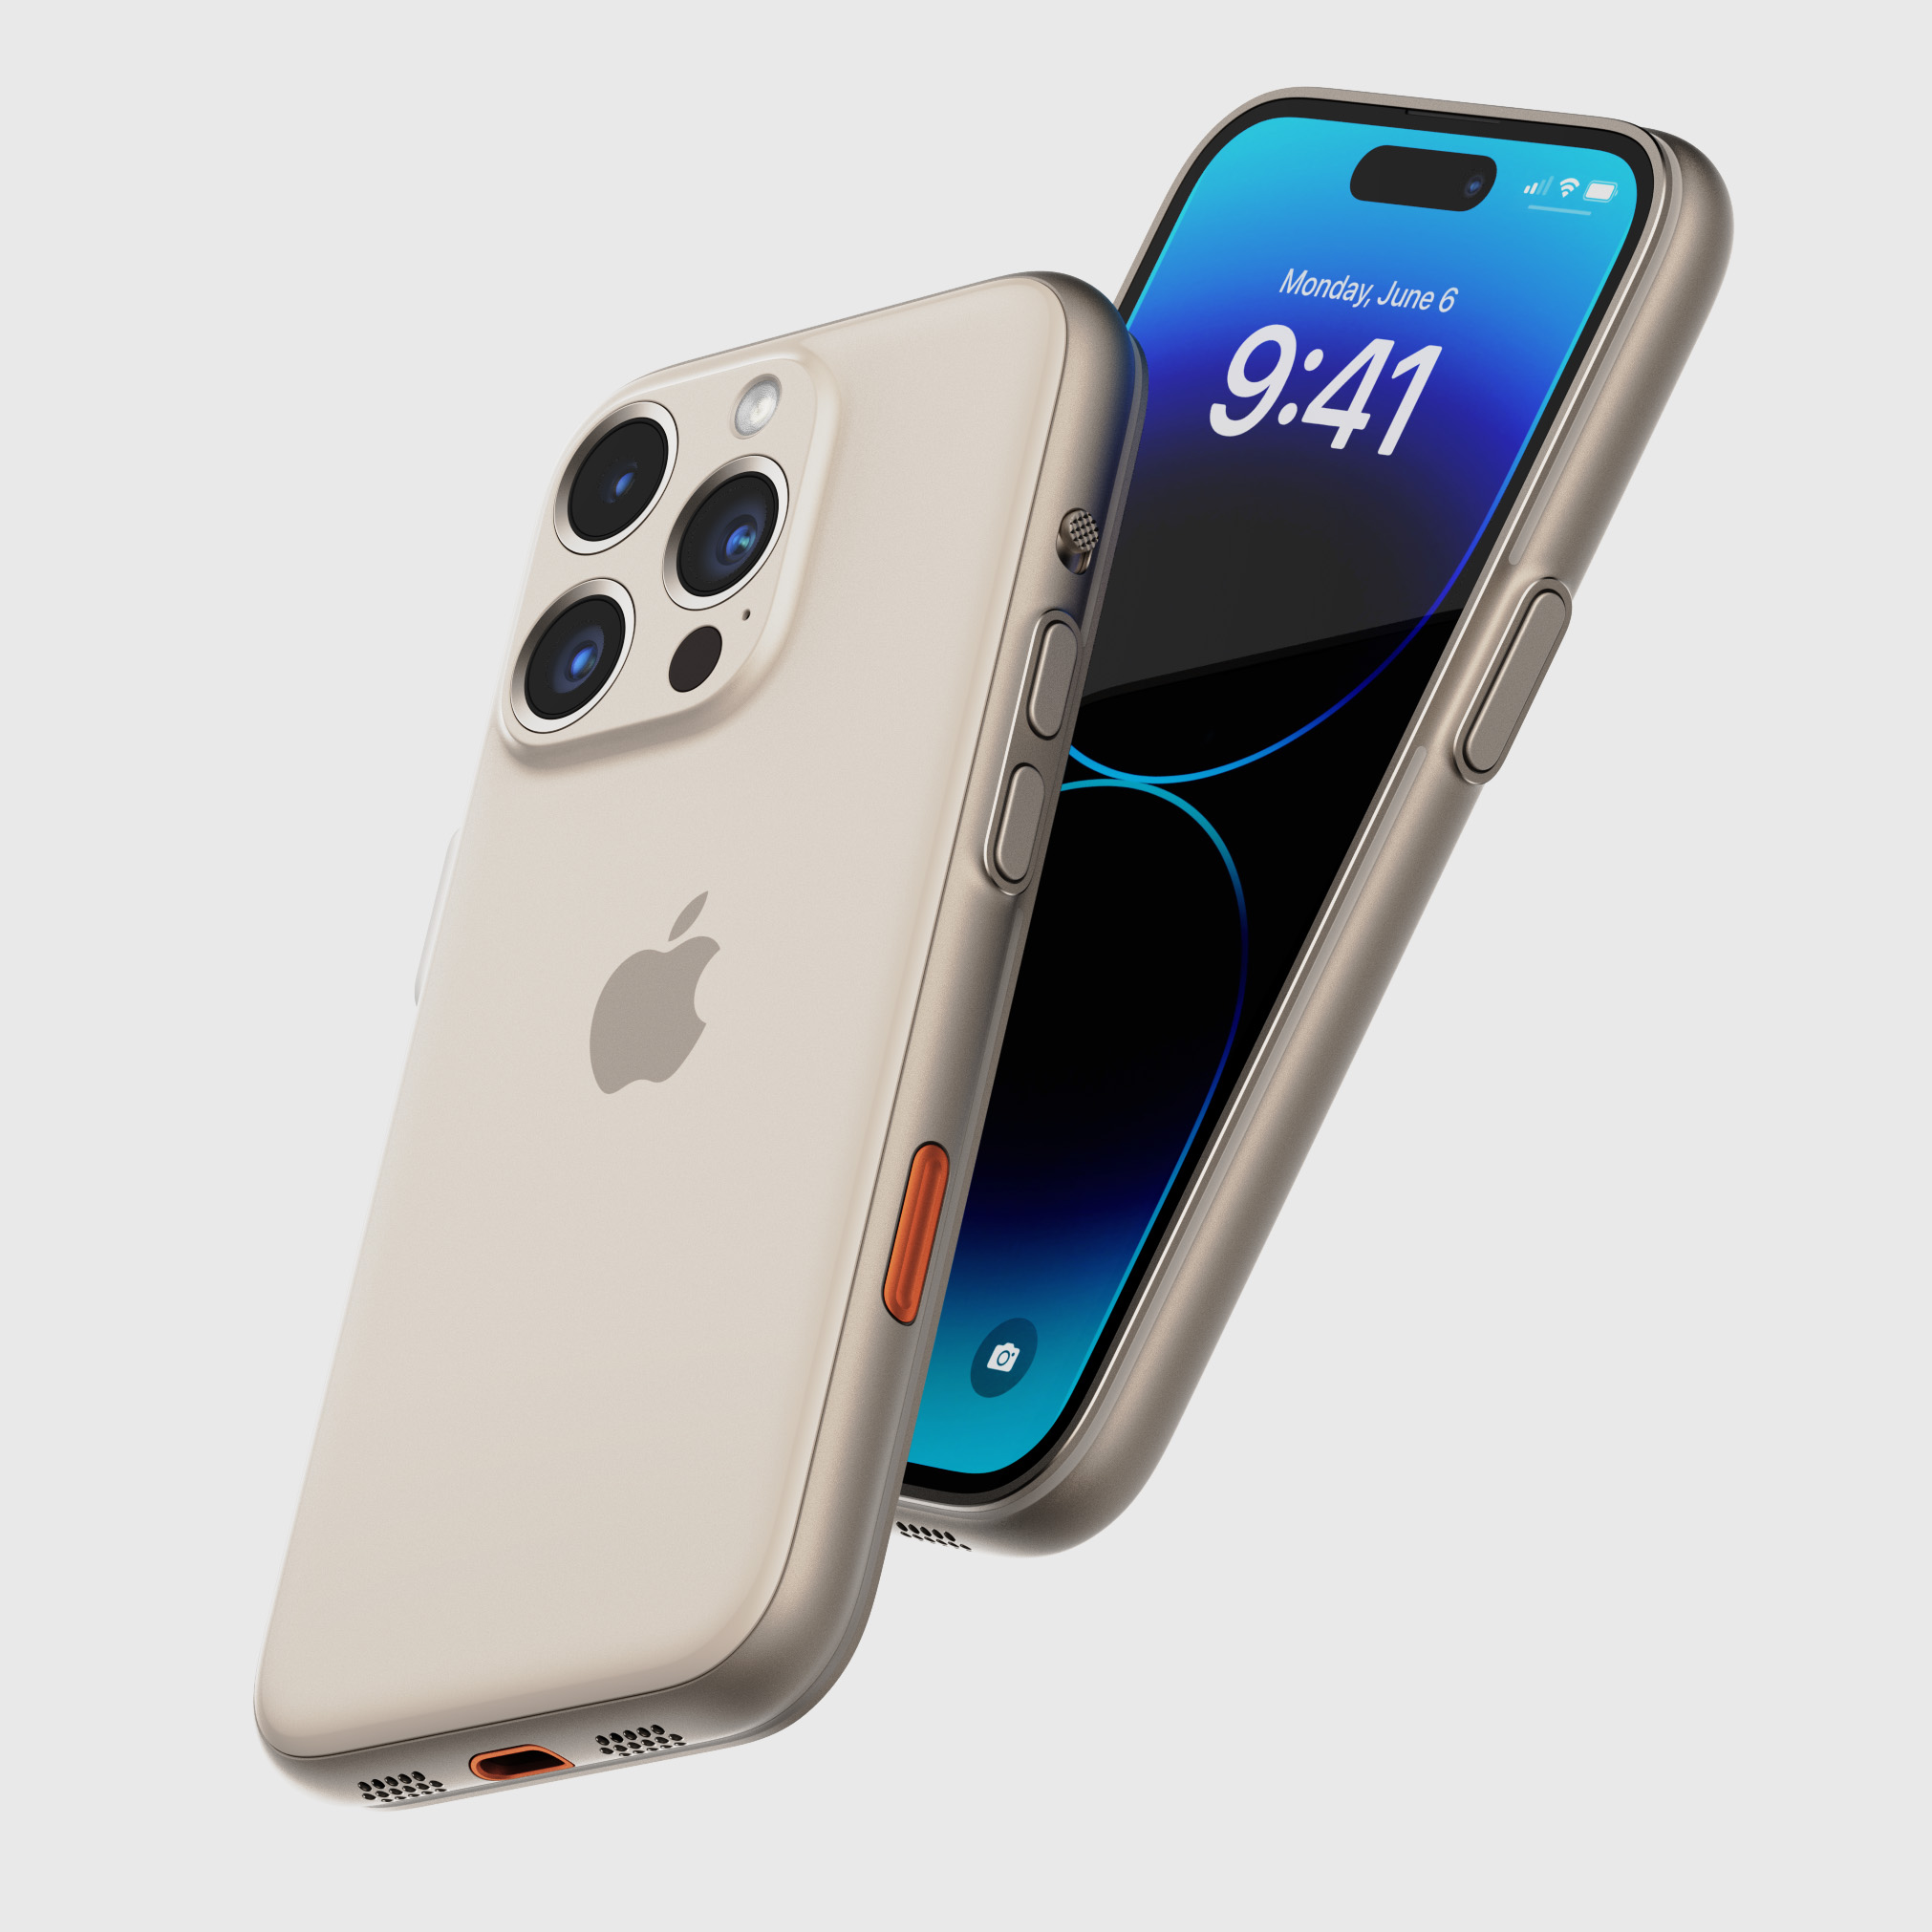 iPhone Ultra rendering